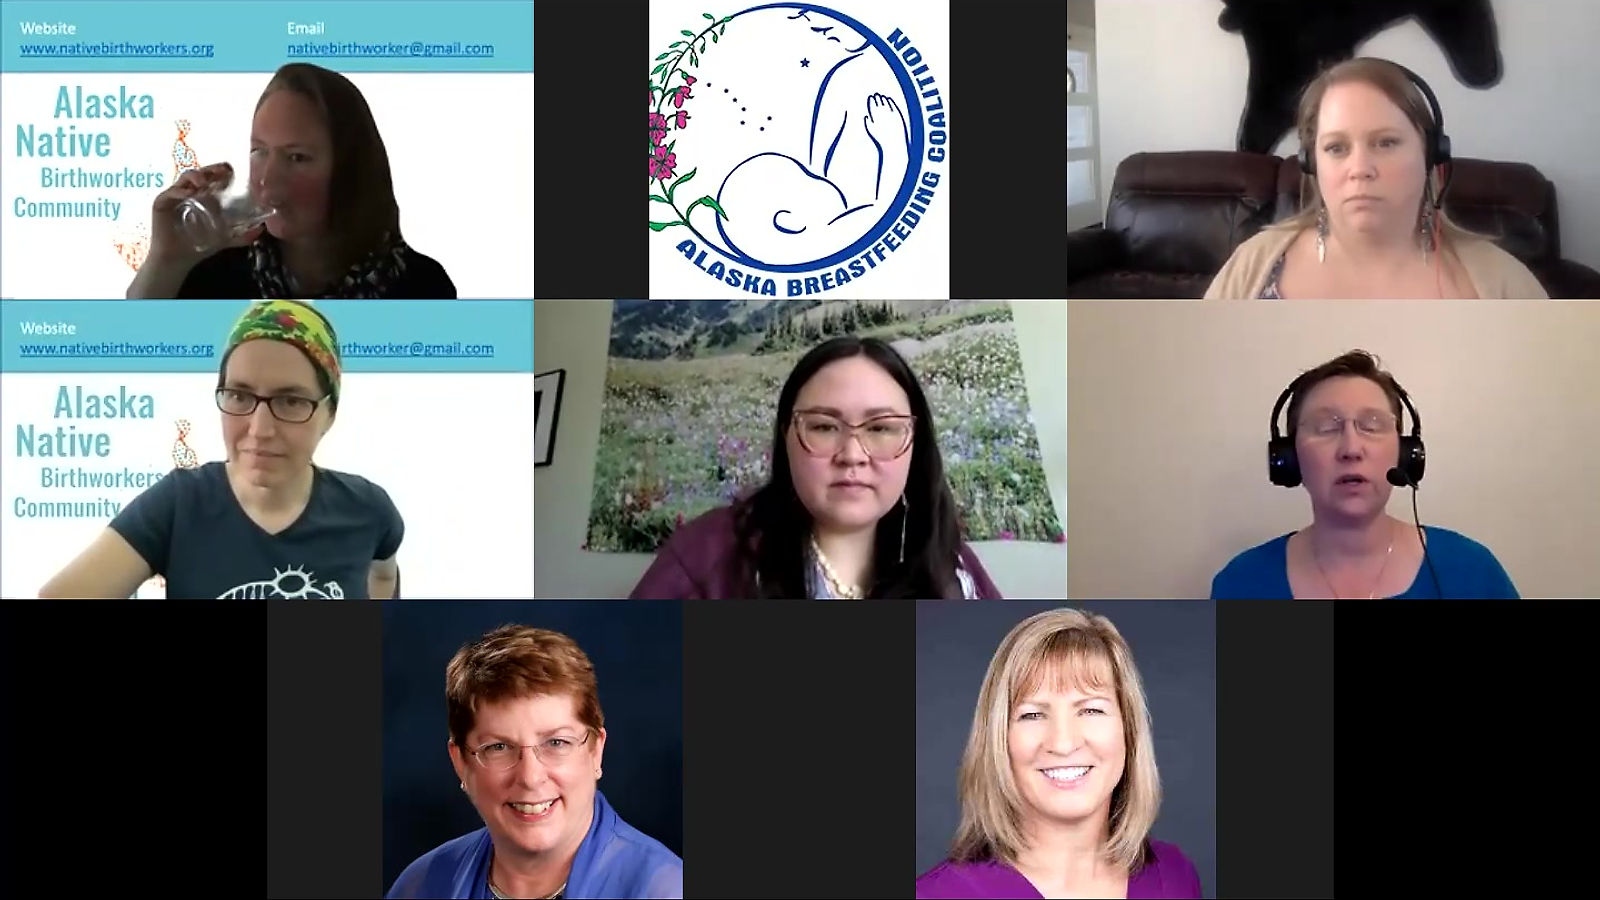 Closing Remarks-Alaska Native Breastfeeding Experience